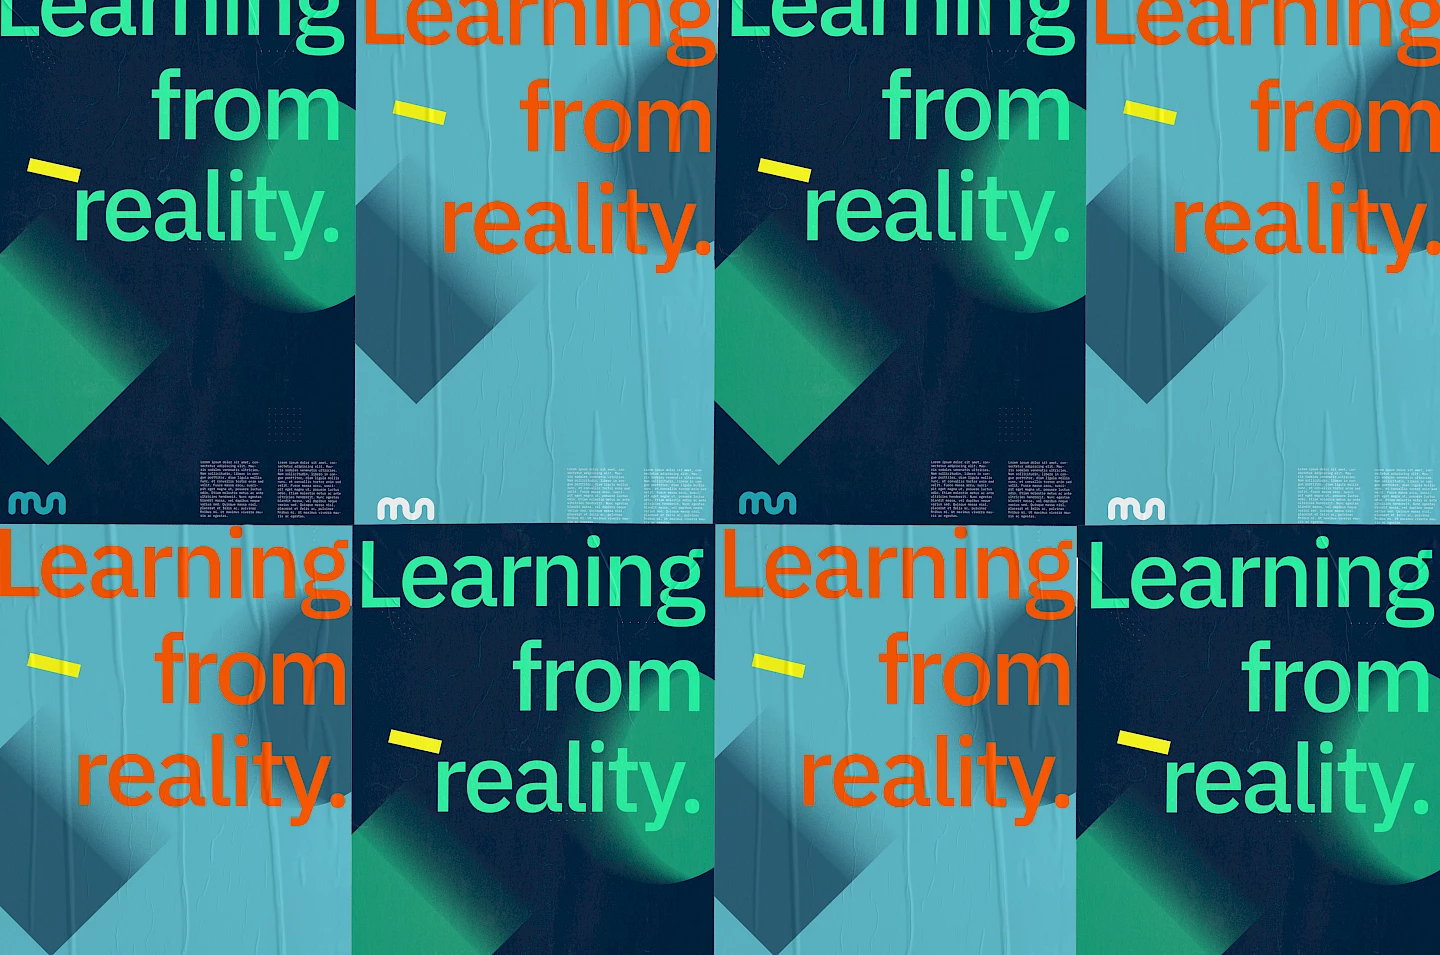 posters branding from learning narrative mondragon strategy move unibertsitatea mockup reality claim 